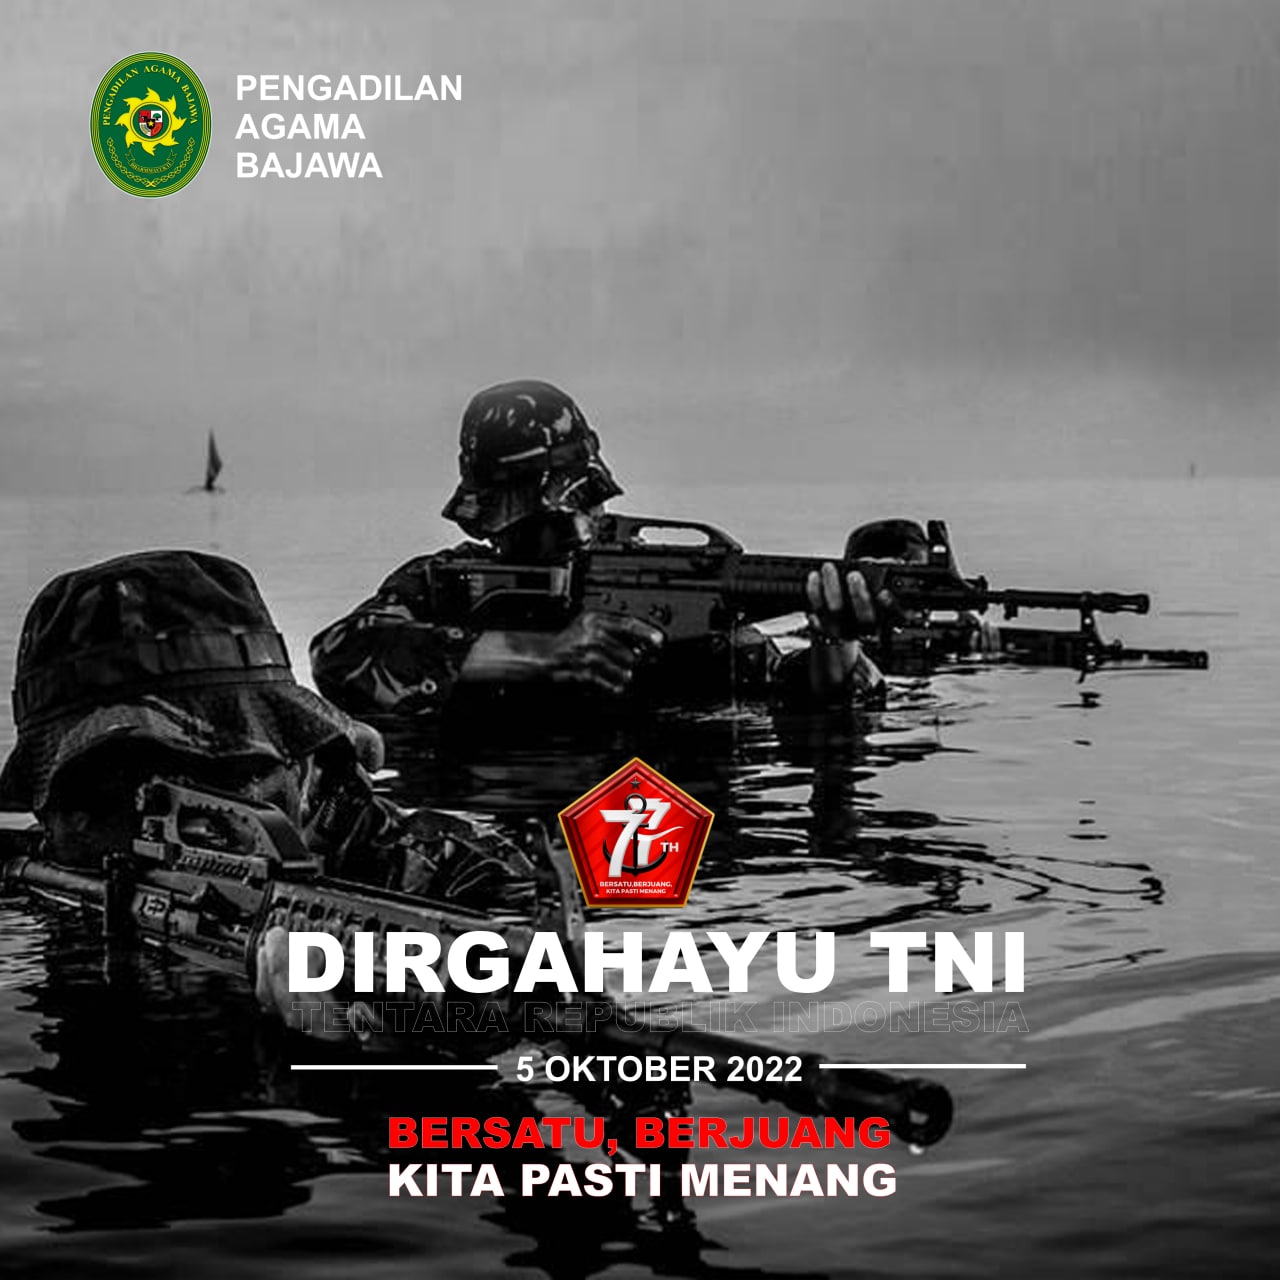 Dirgahayu TNI ke 77 5 oktober 2022